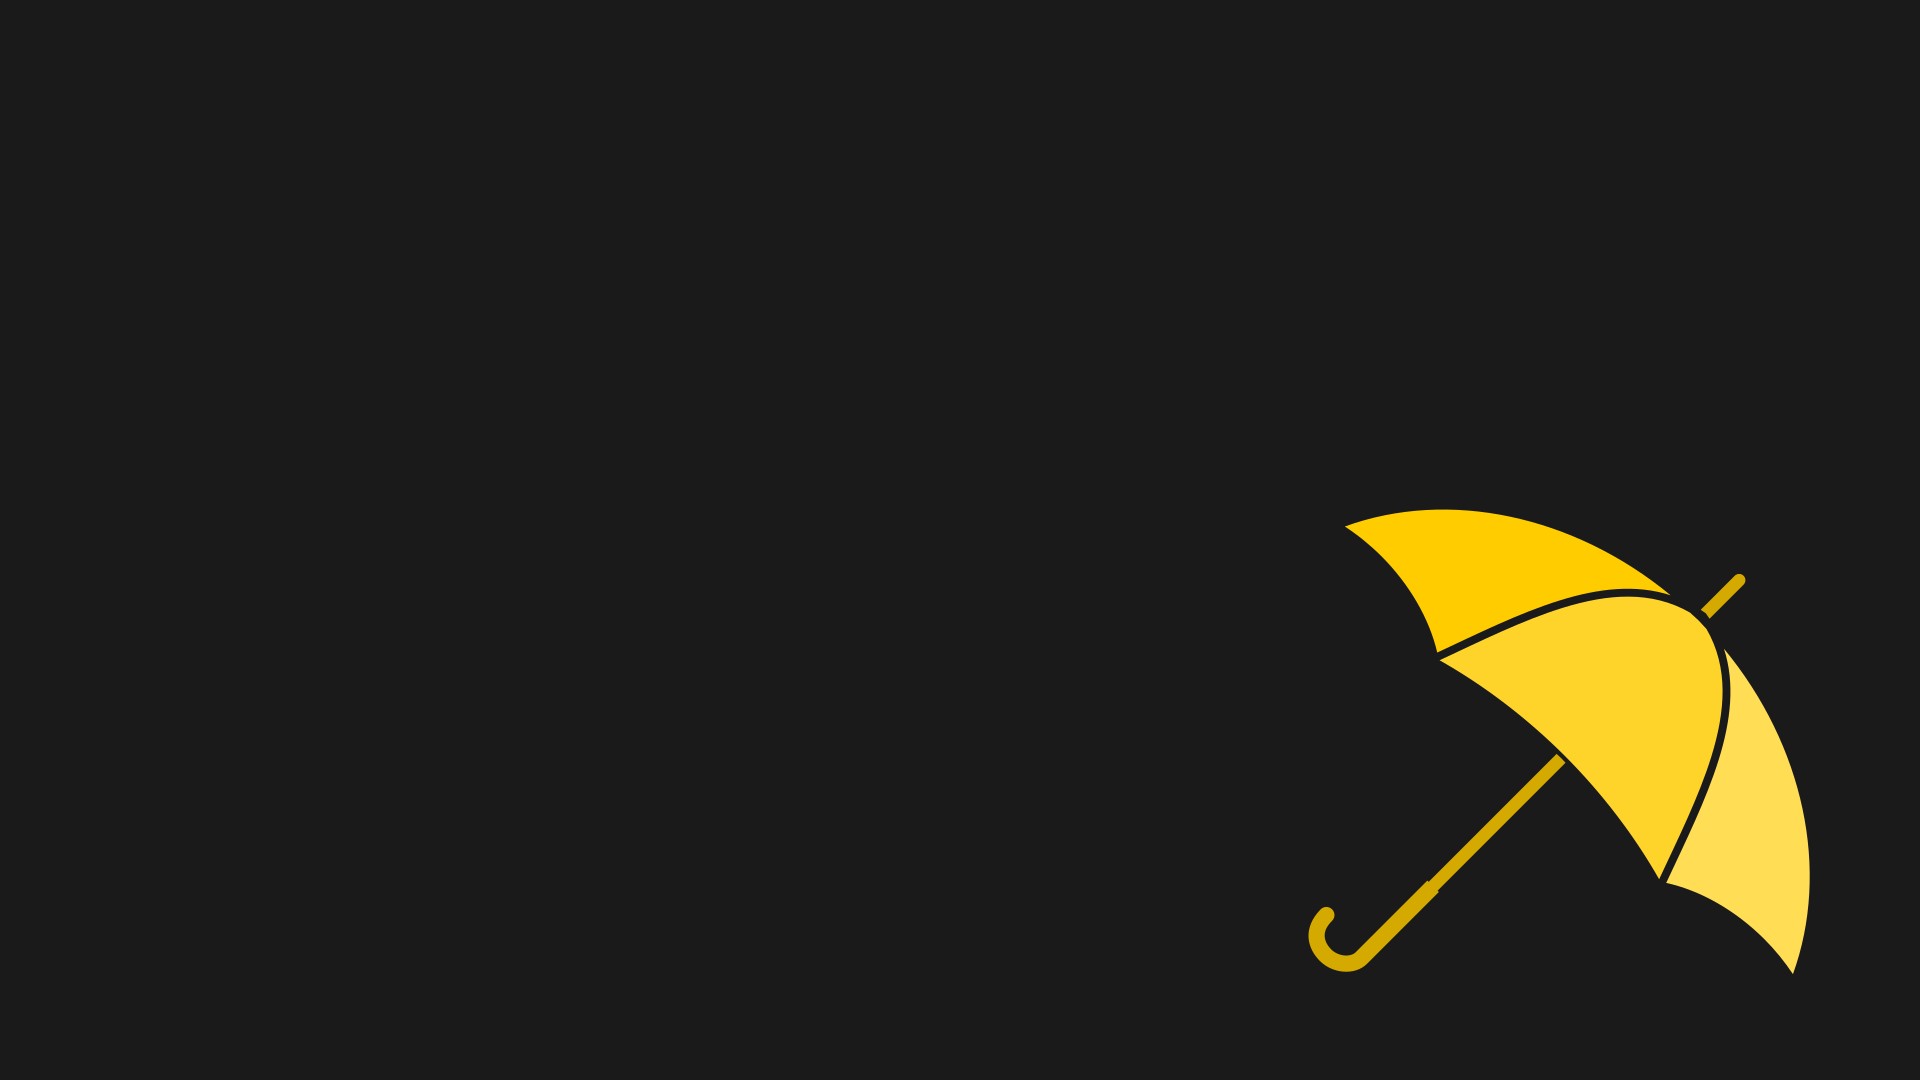 Ted Mosby, Barney Stinson, How I Met Your Mother, Umbrella, Yellow Umbrella Wallpaper